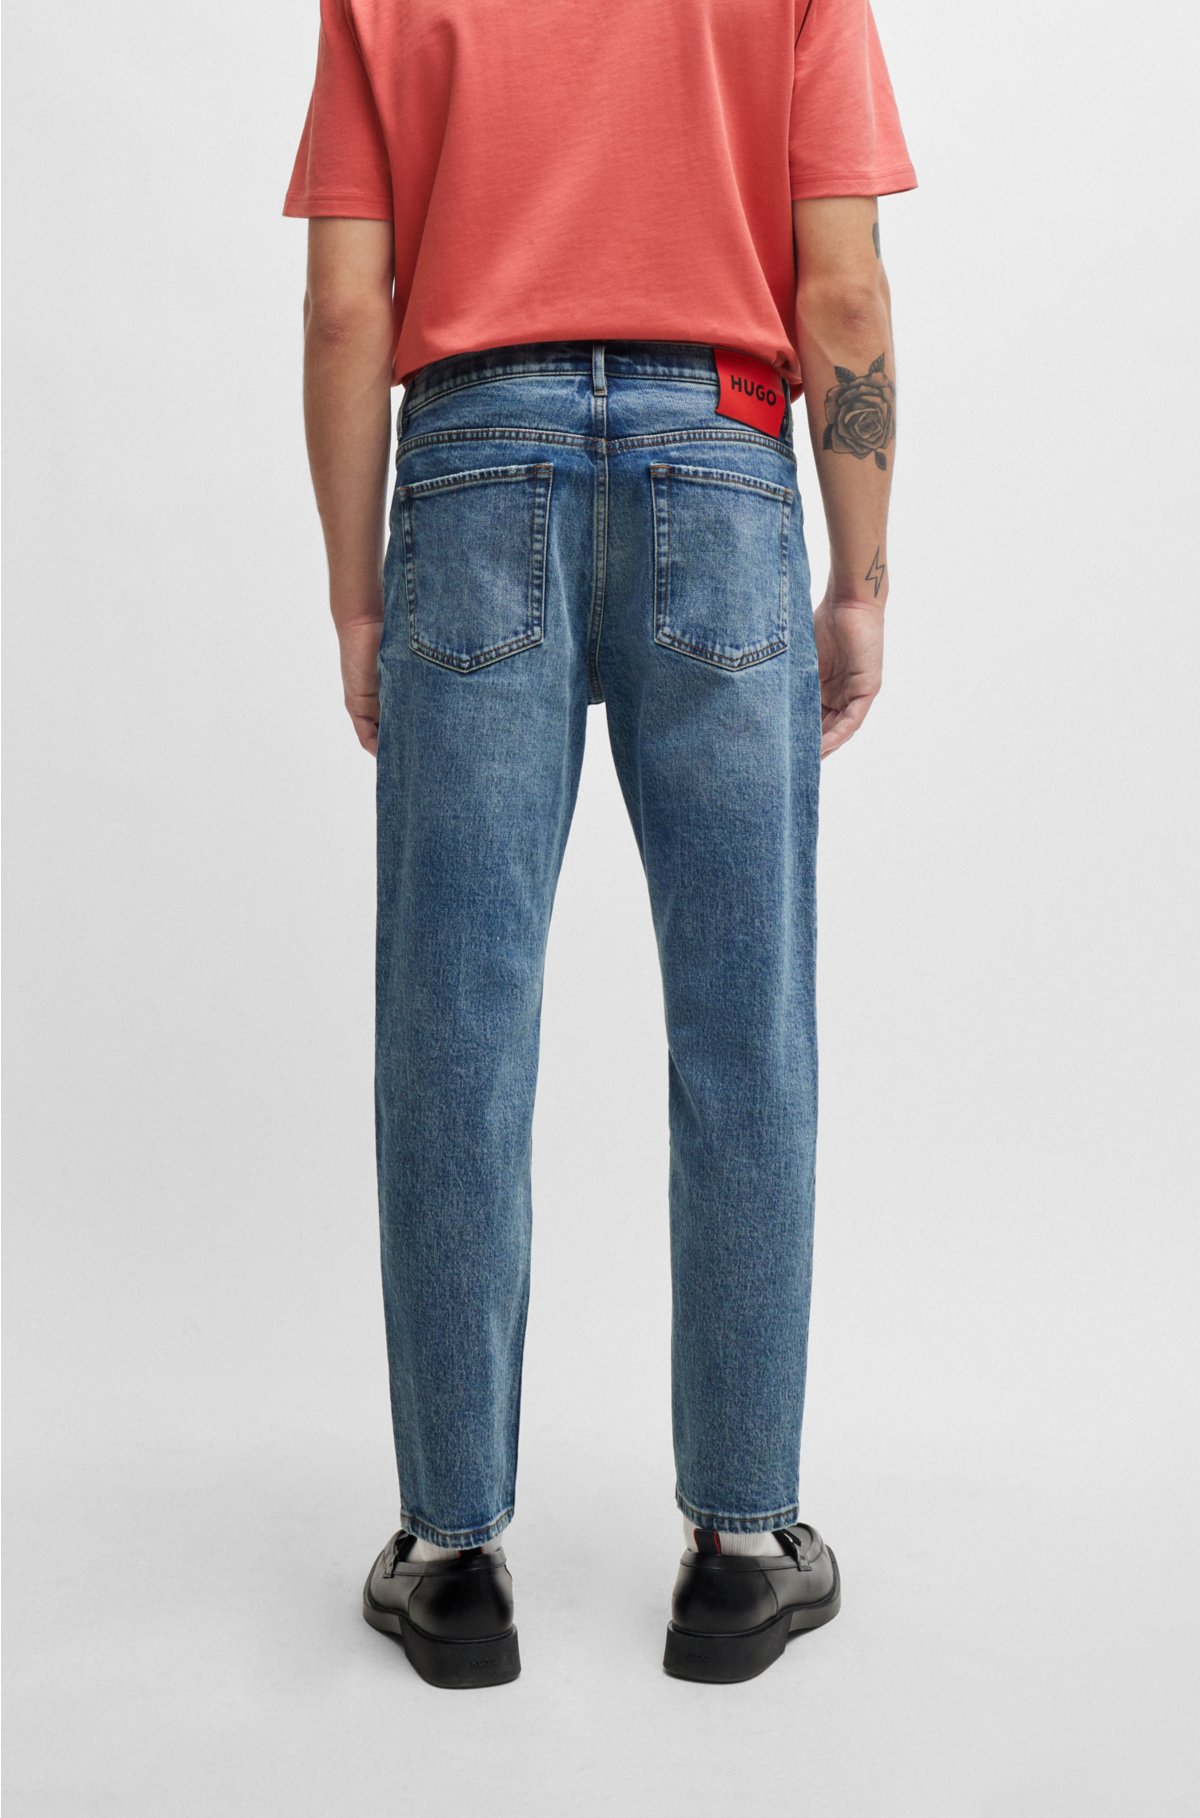 HUGO - Tapered-fit jeans in blue stretch denim